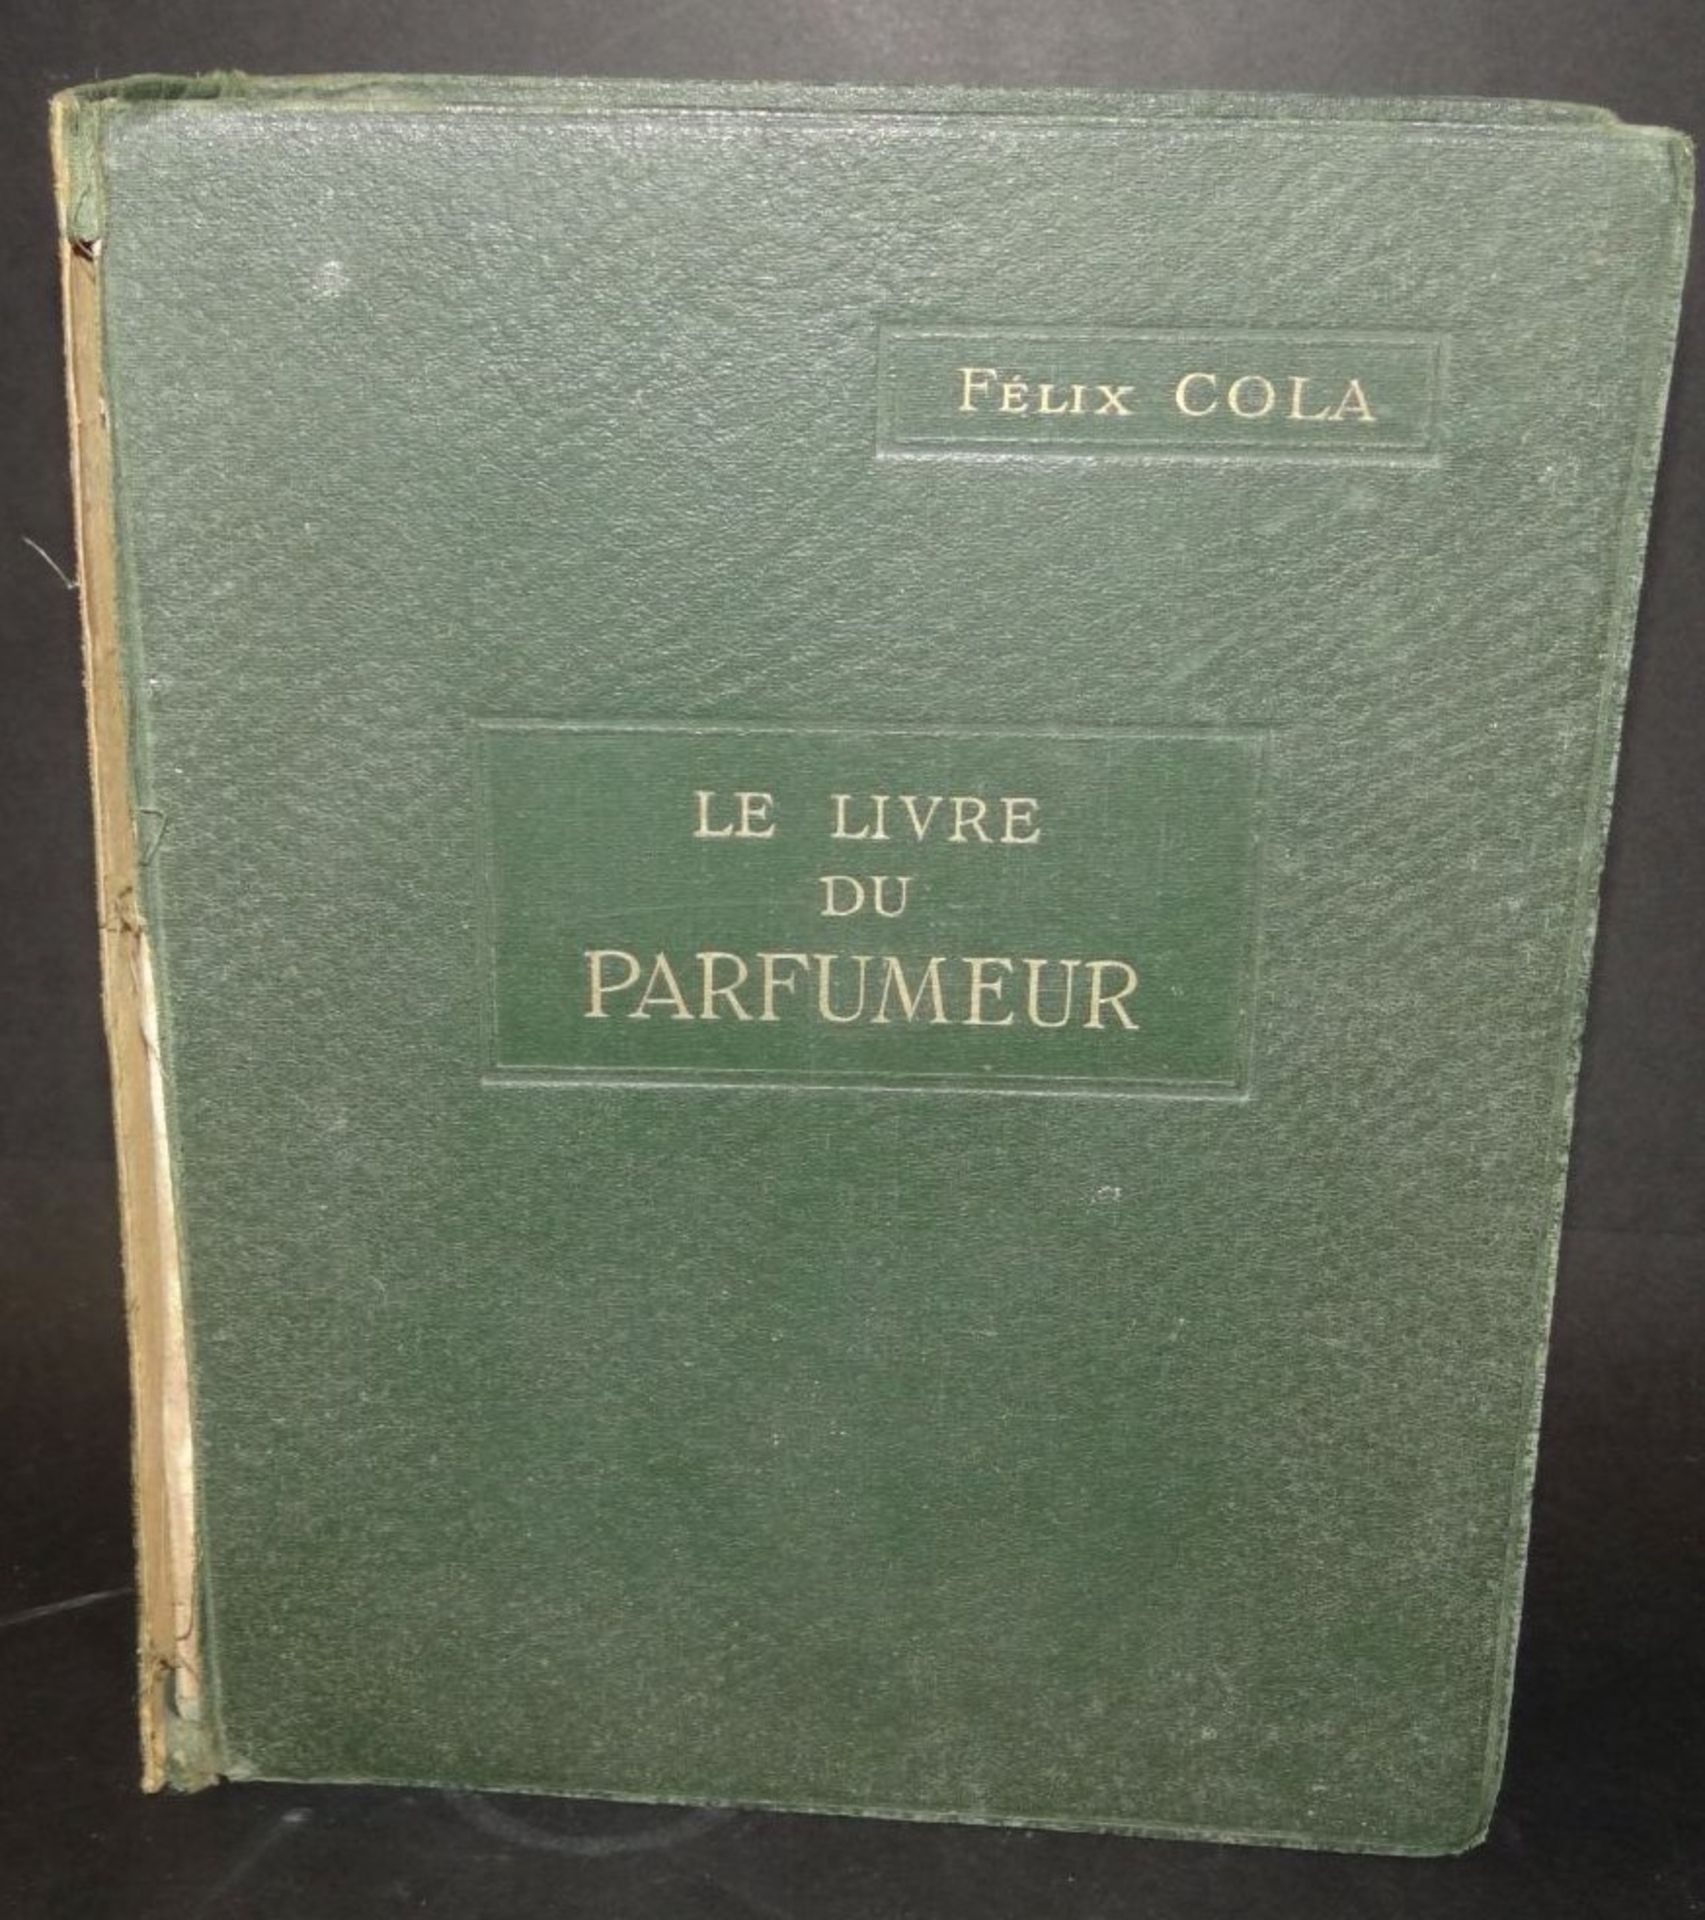 Felix Cola "Le livre de parfumeur" 1931, Selbstverlag, Alters-u. Gebrauchsspuren (Das Buch des